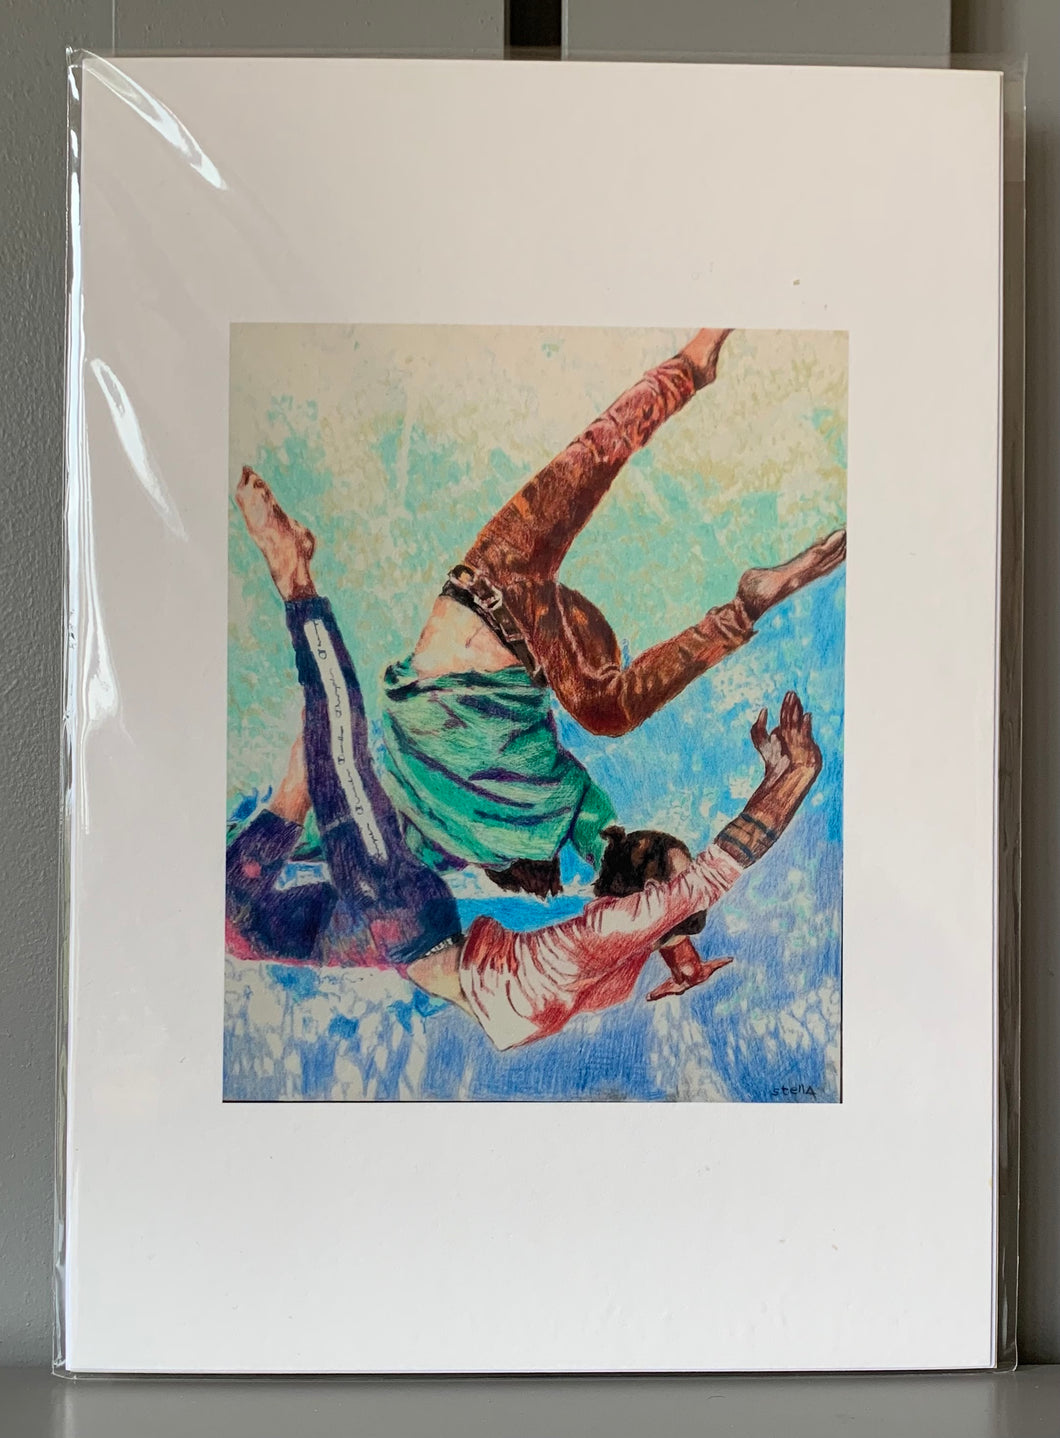 Fine art print reproduction of Southbank acrobats: duet original mixed media artwork by Stella Tooth British figurative artist performer art